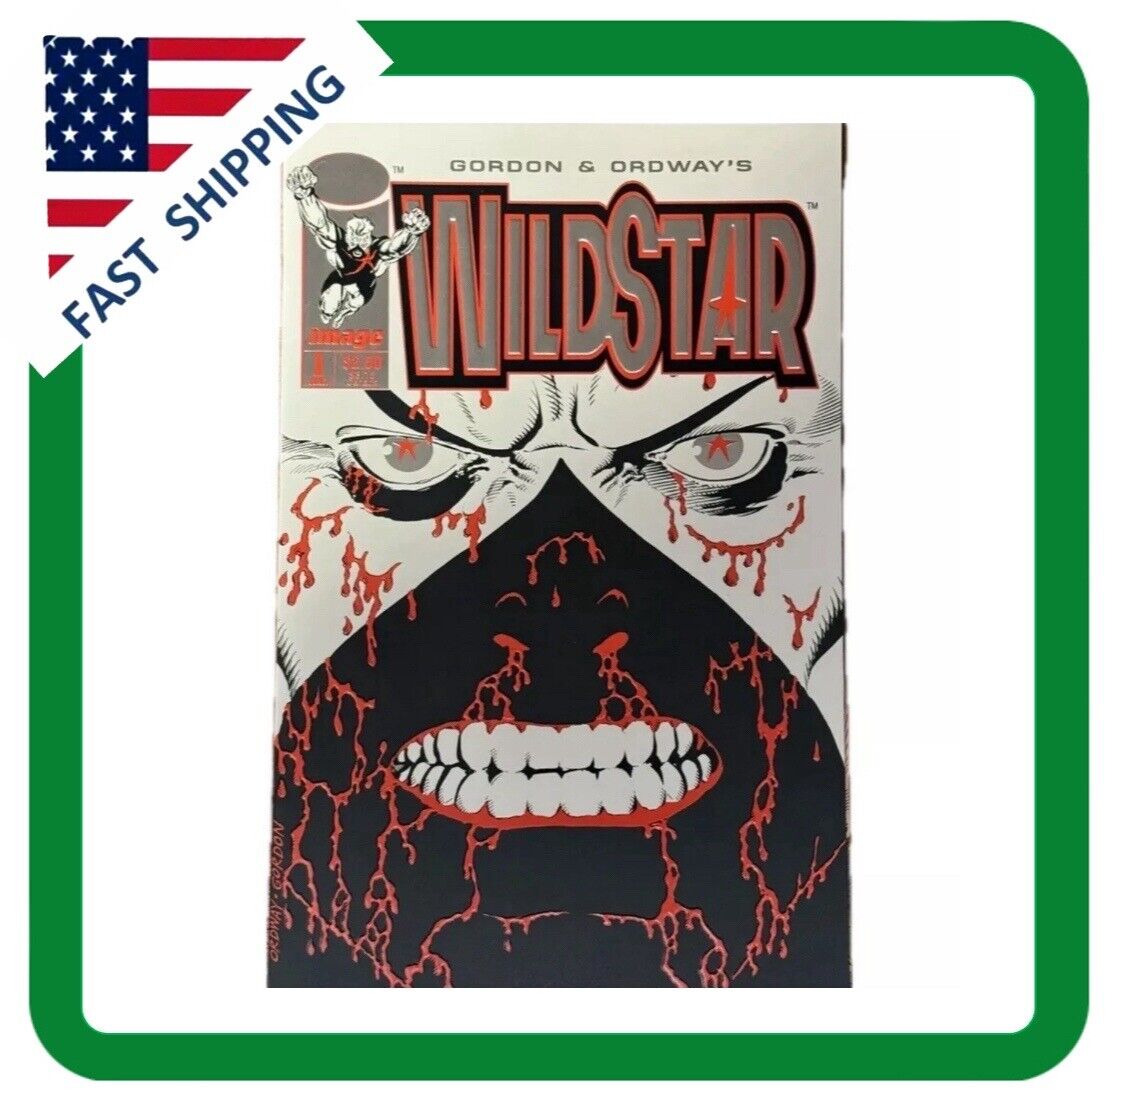 WILDSTAR SKY ZERO 1 - EMBOSSED BLOODY COVER - Image Comics 1993